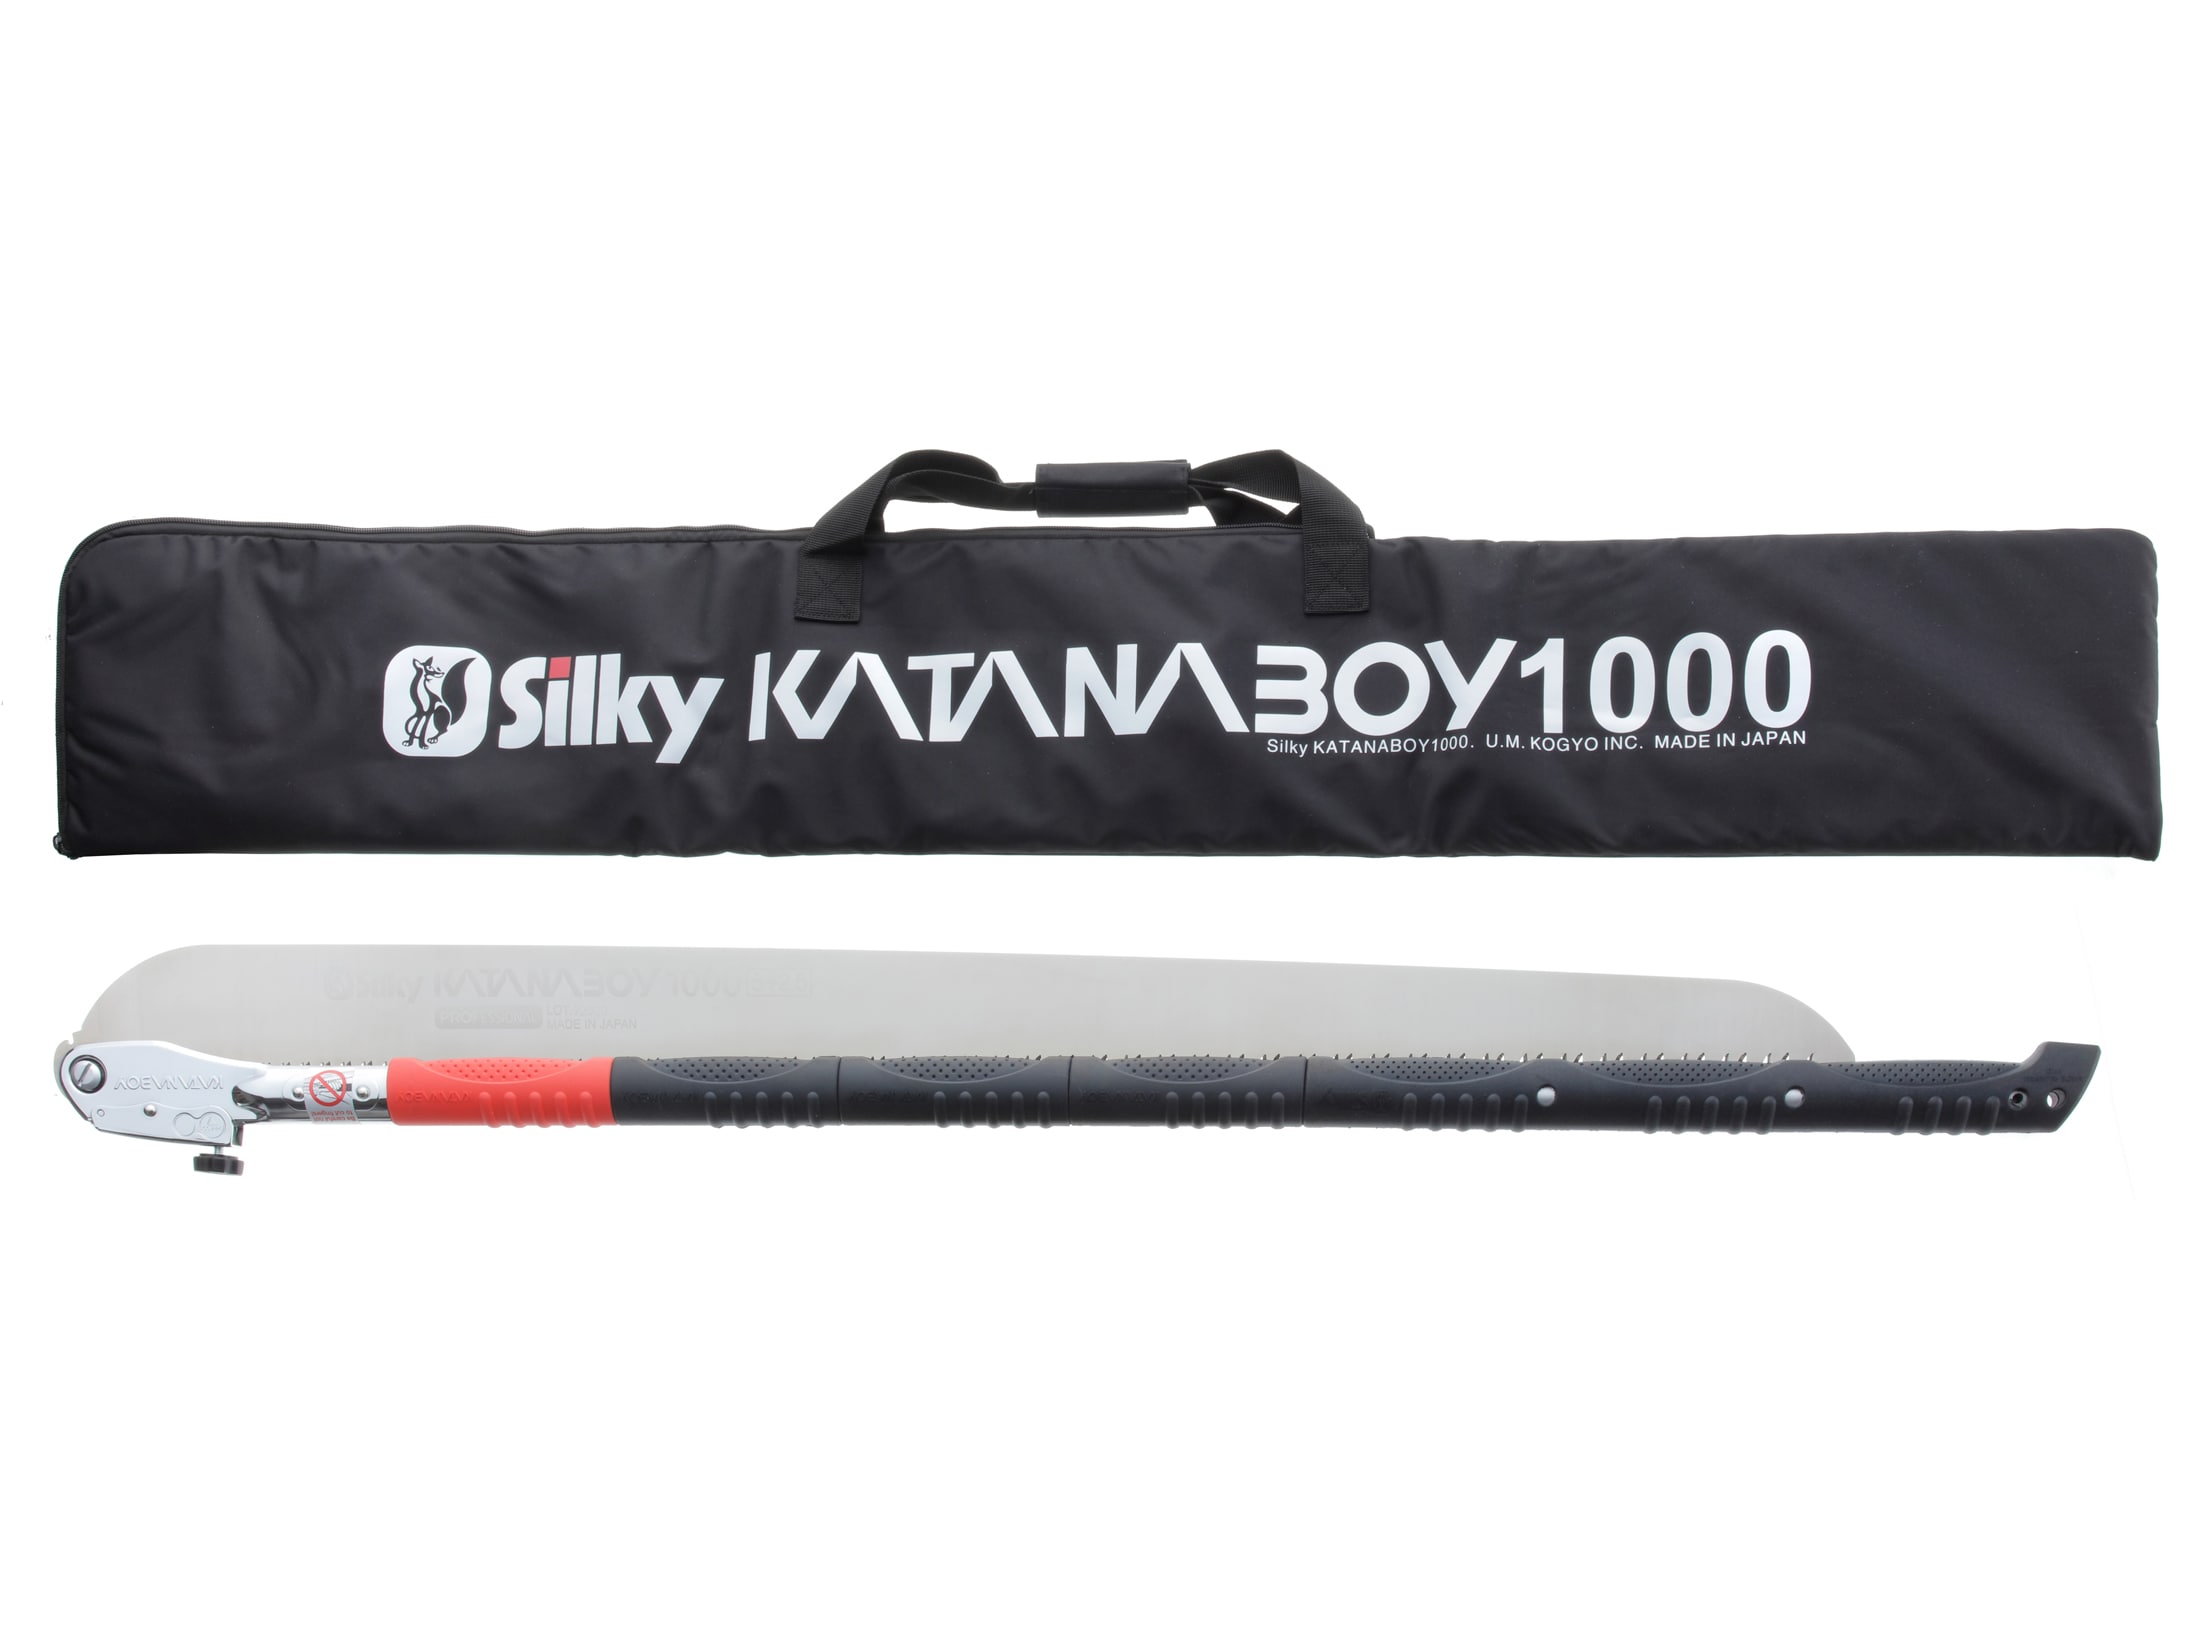 Silky Katanaboy Professional 1000 Folding Saw For Sale